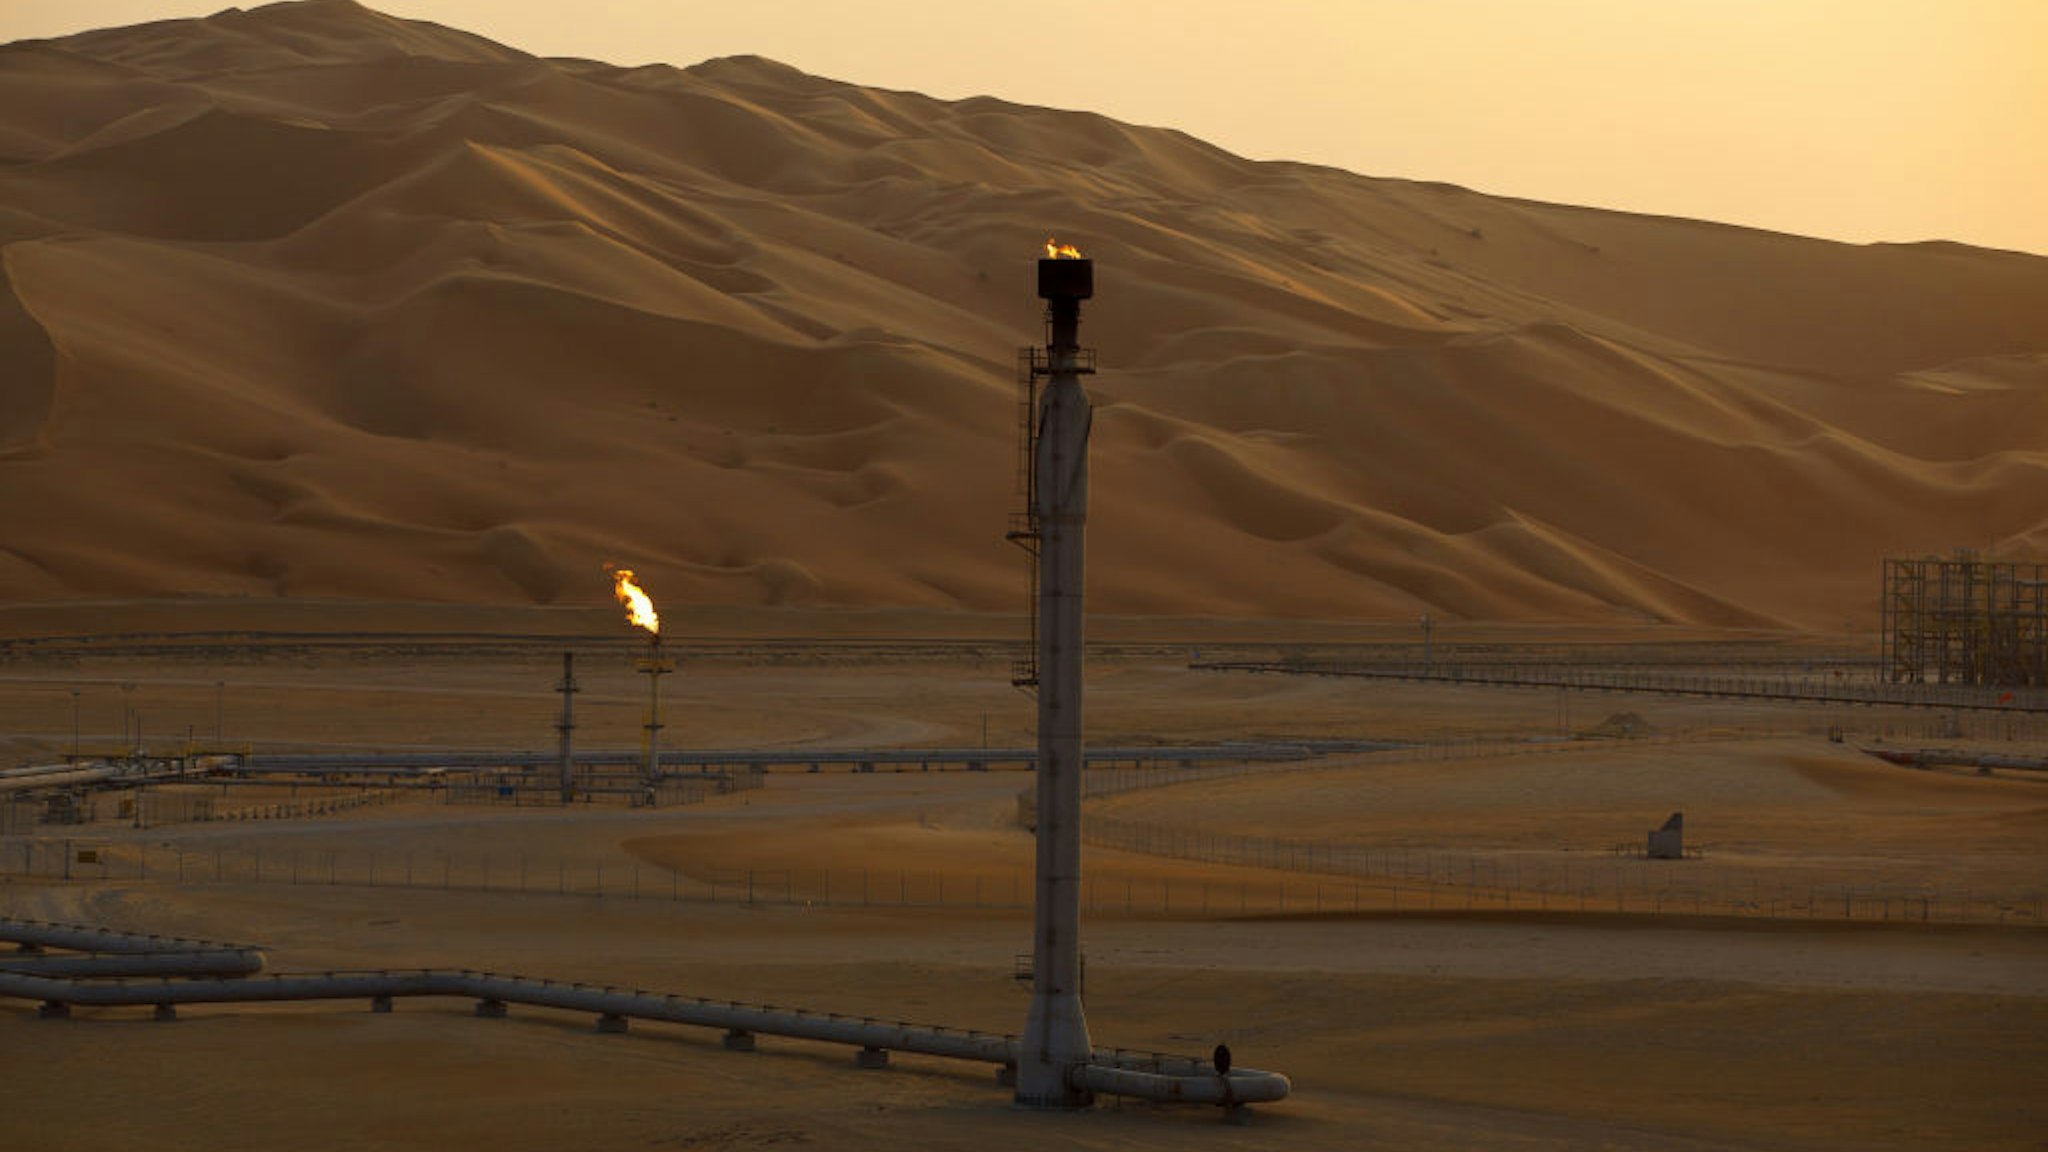 Flames burn off at an oil processing facility in Saudi Aramco's oilfield in the Rub' Al-Khali (Empty Quarter) desert in Shaybah, Saudi Arabia, on Tuesday, Oct. 2, 2018.